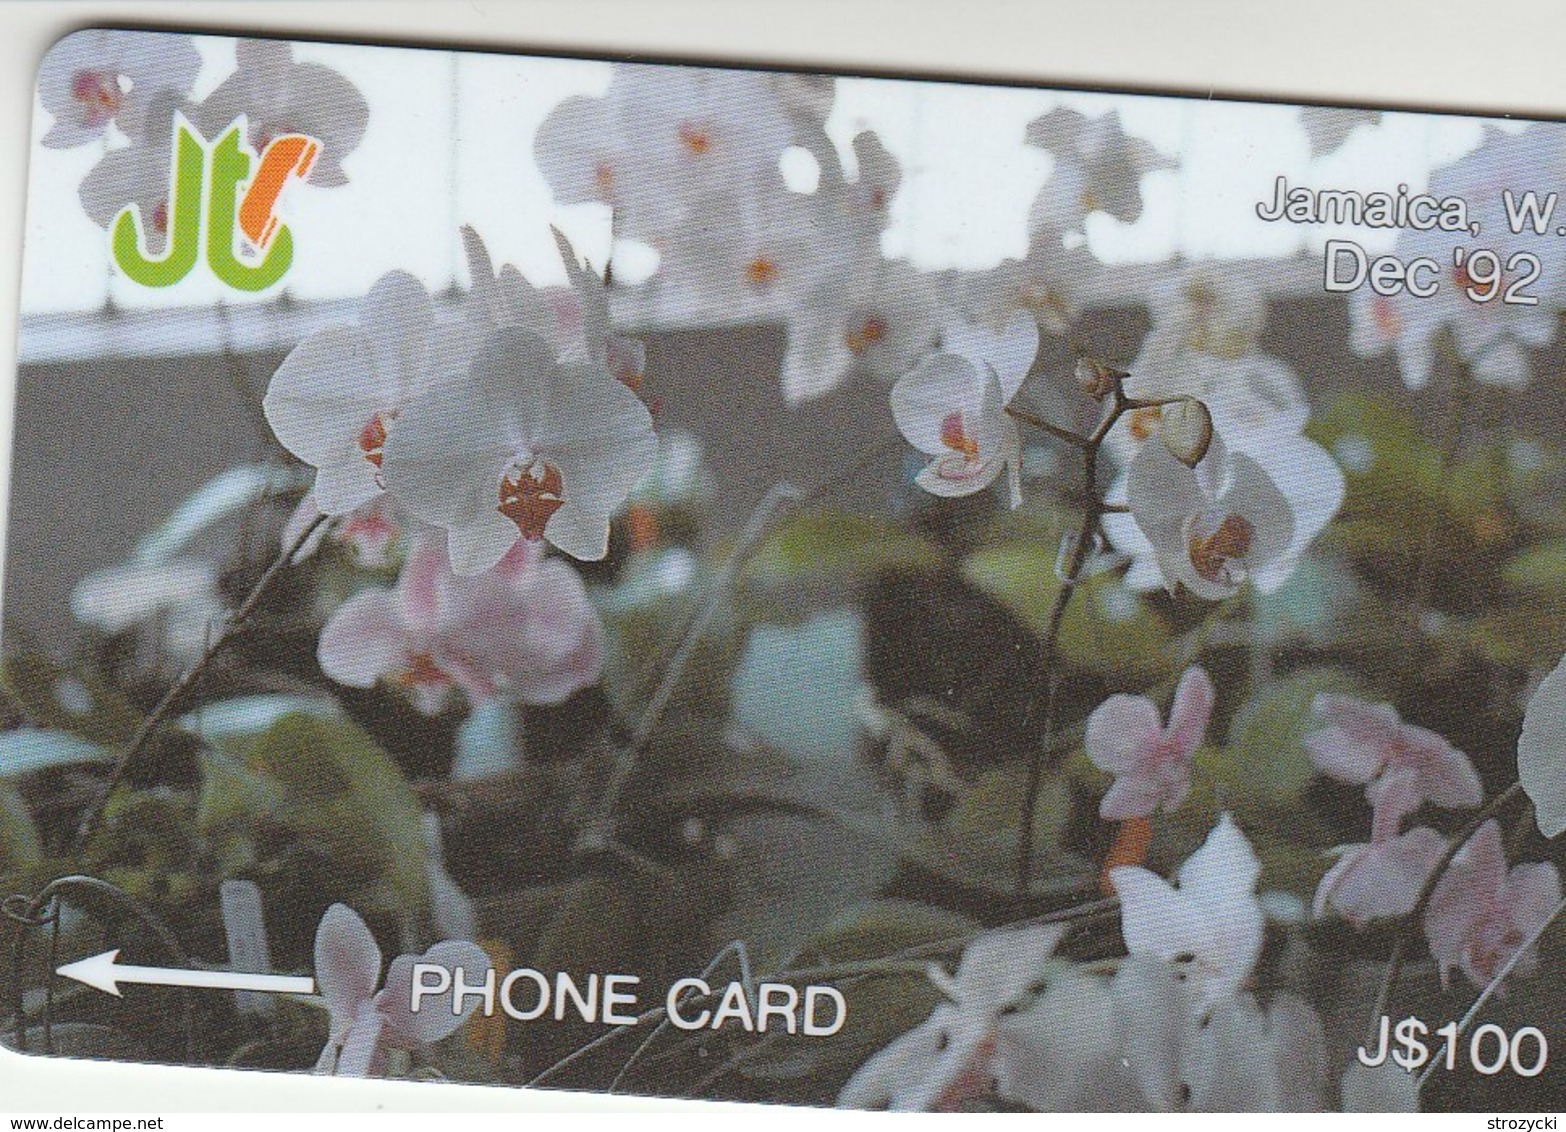 Jamaica - White Orchids - 11JAMD - Jamaica